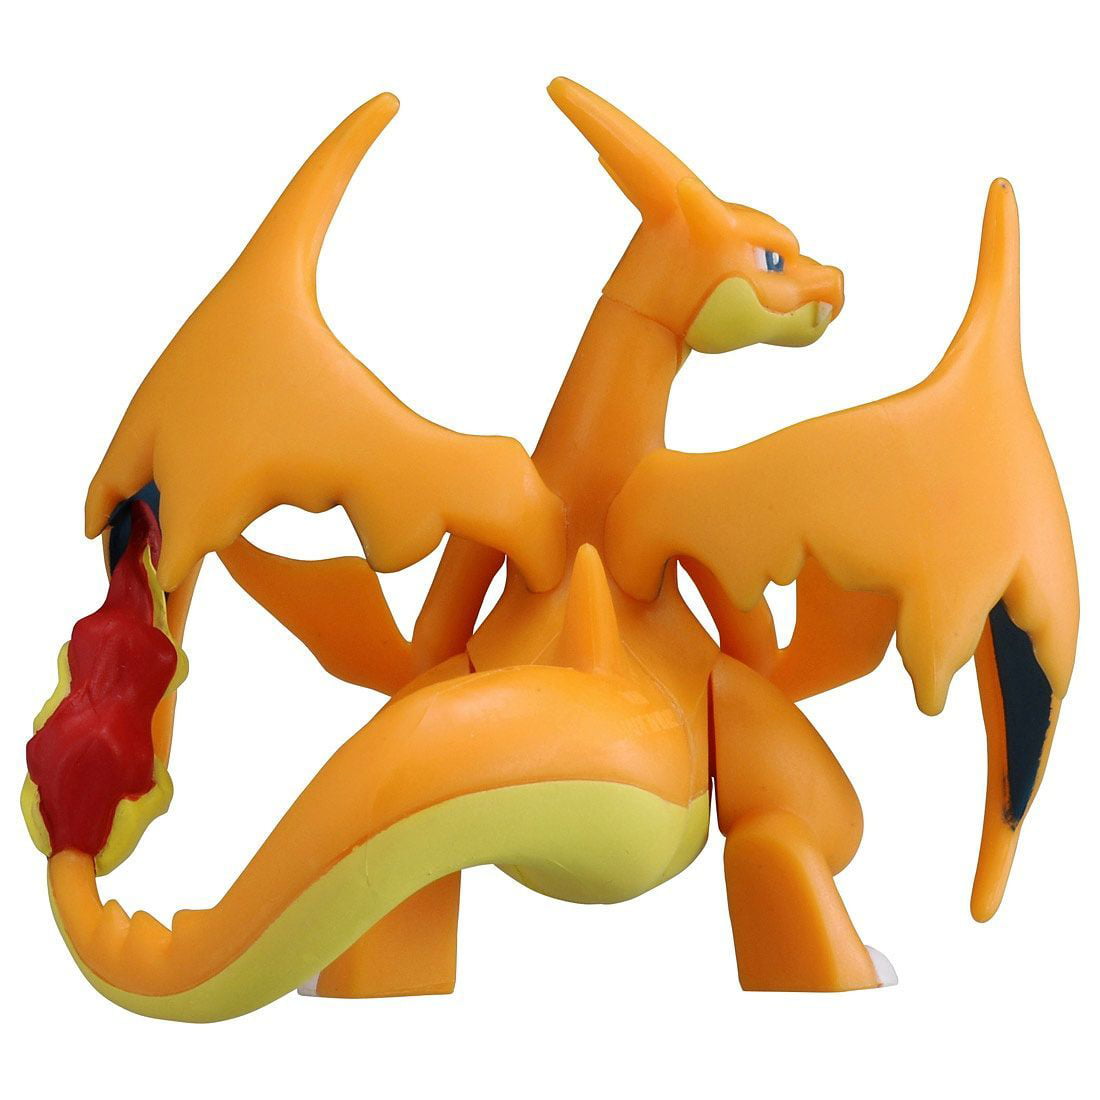 Mega Charizard X Pokémon Xy (15cm) Articulado Takara Tomy